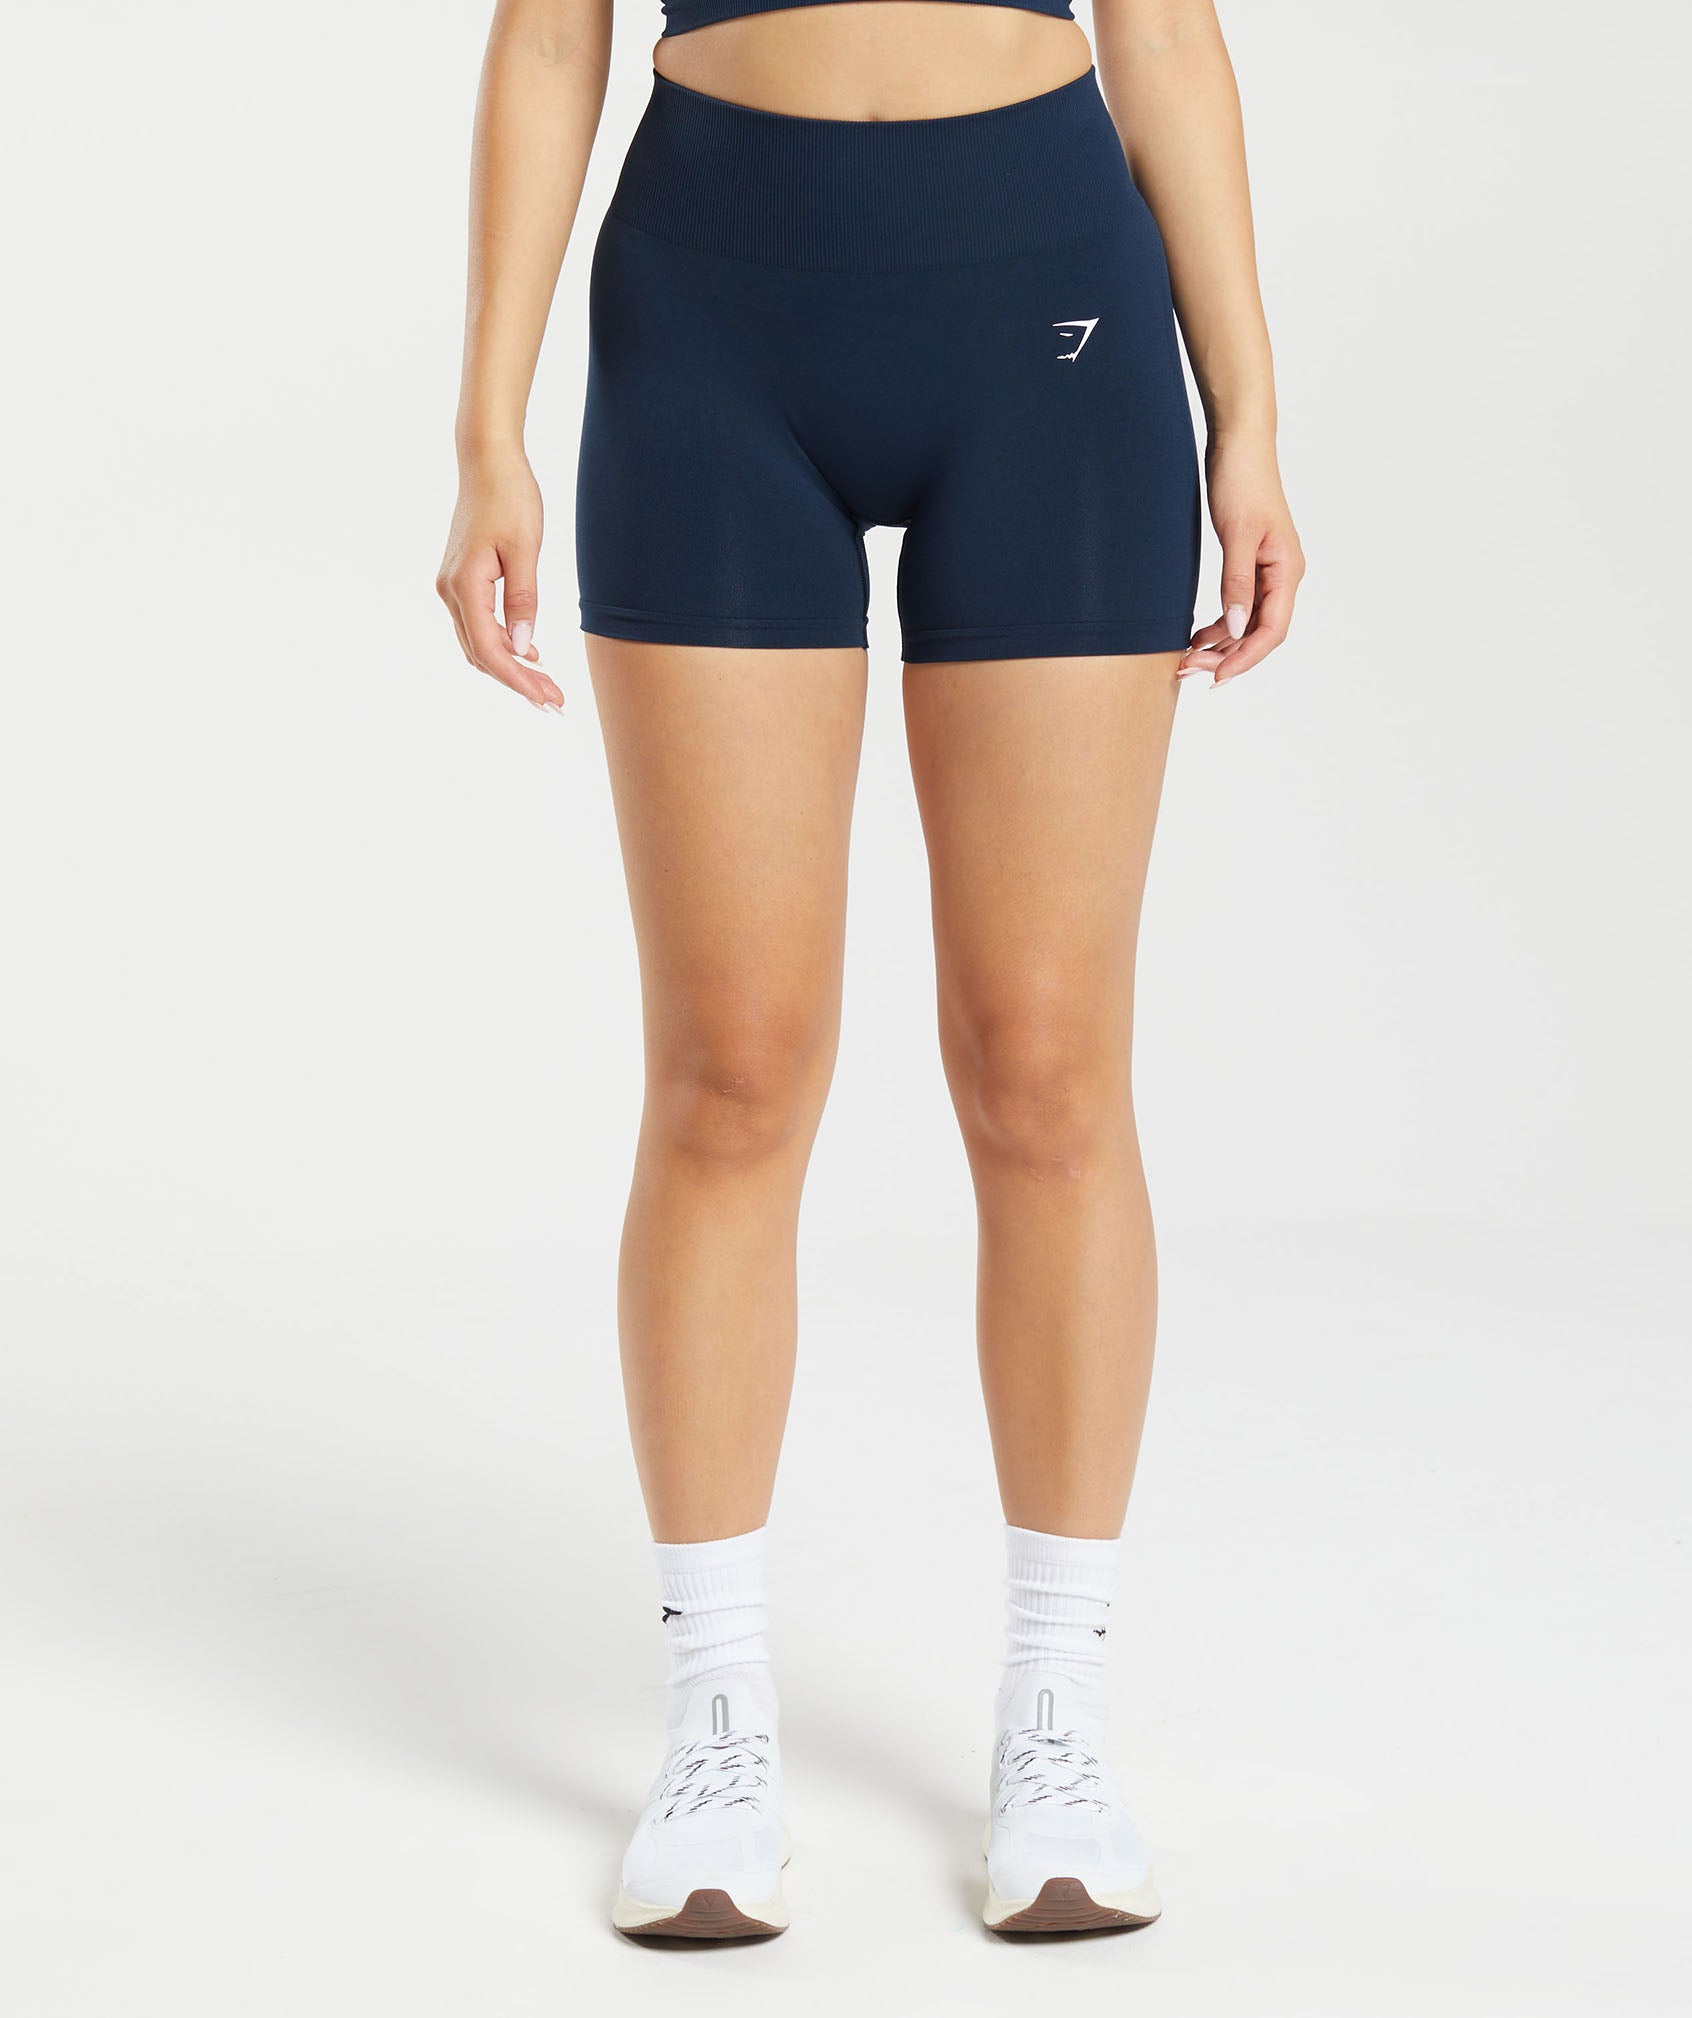 Tried the SWEAT leggings & shorts? 🥵 - Gymshark.com